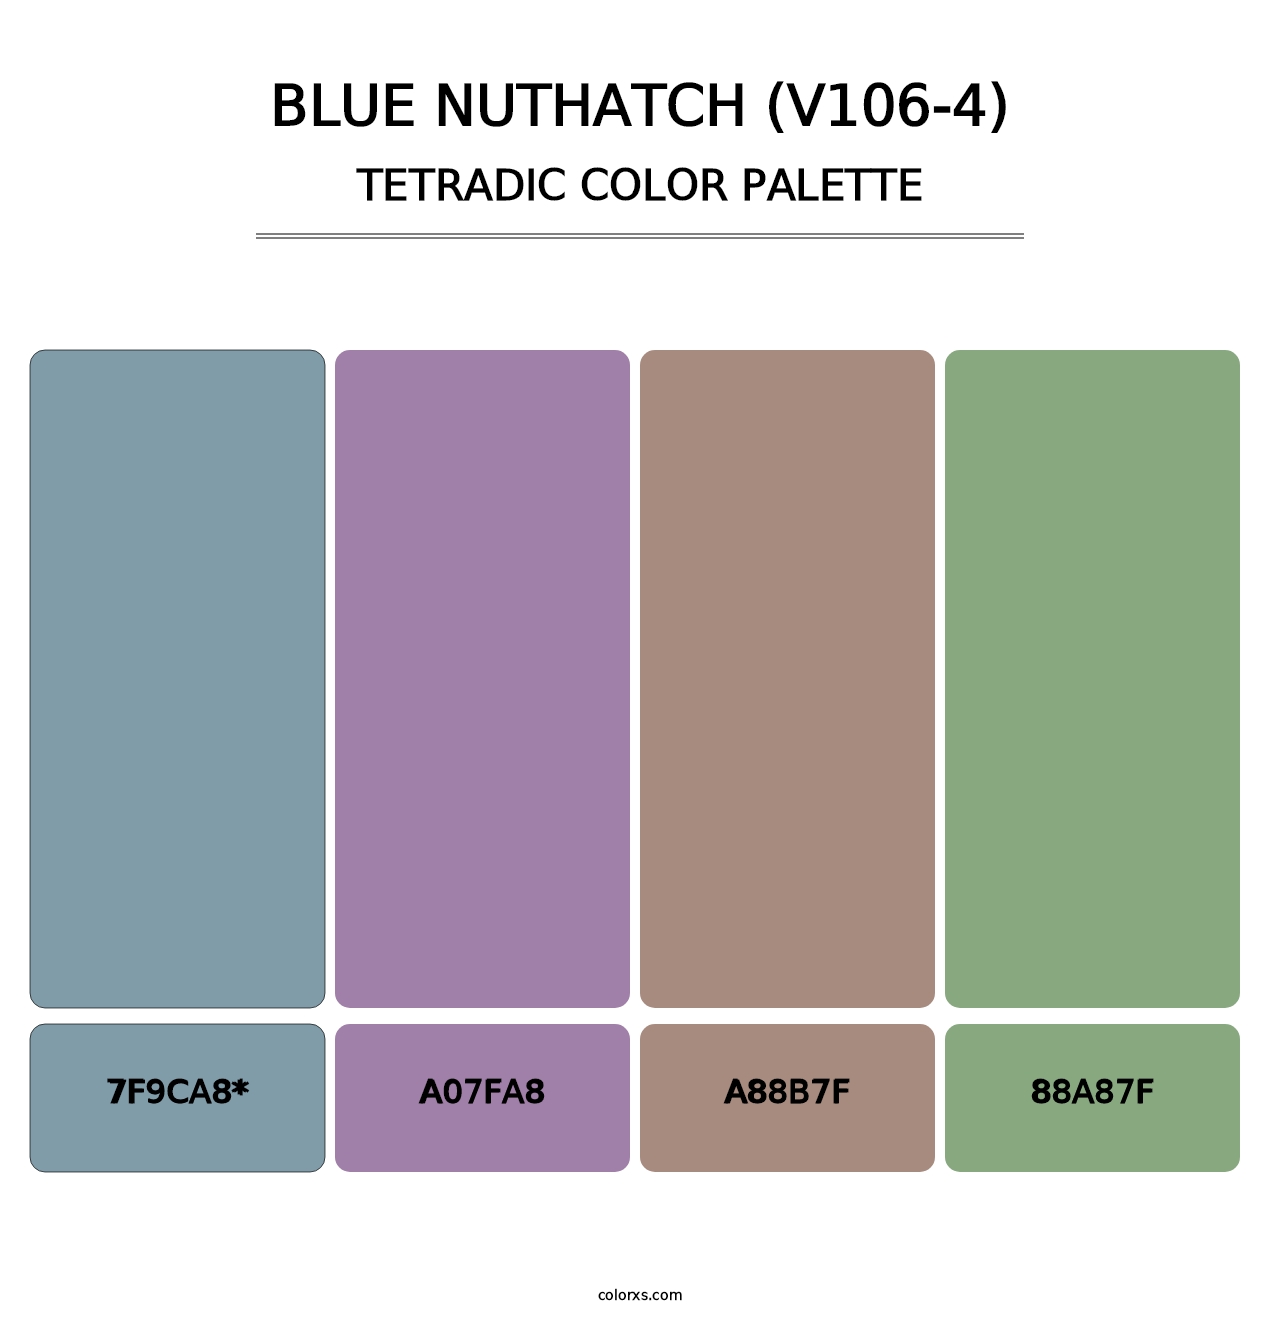 Blue Nuthatch (V106-4) - Tetradic Color Palette